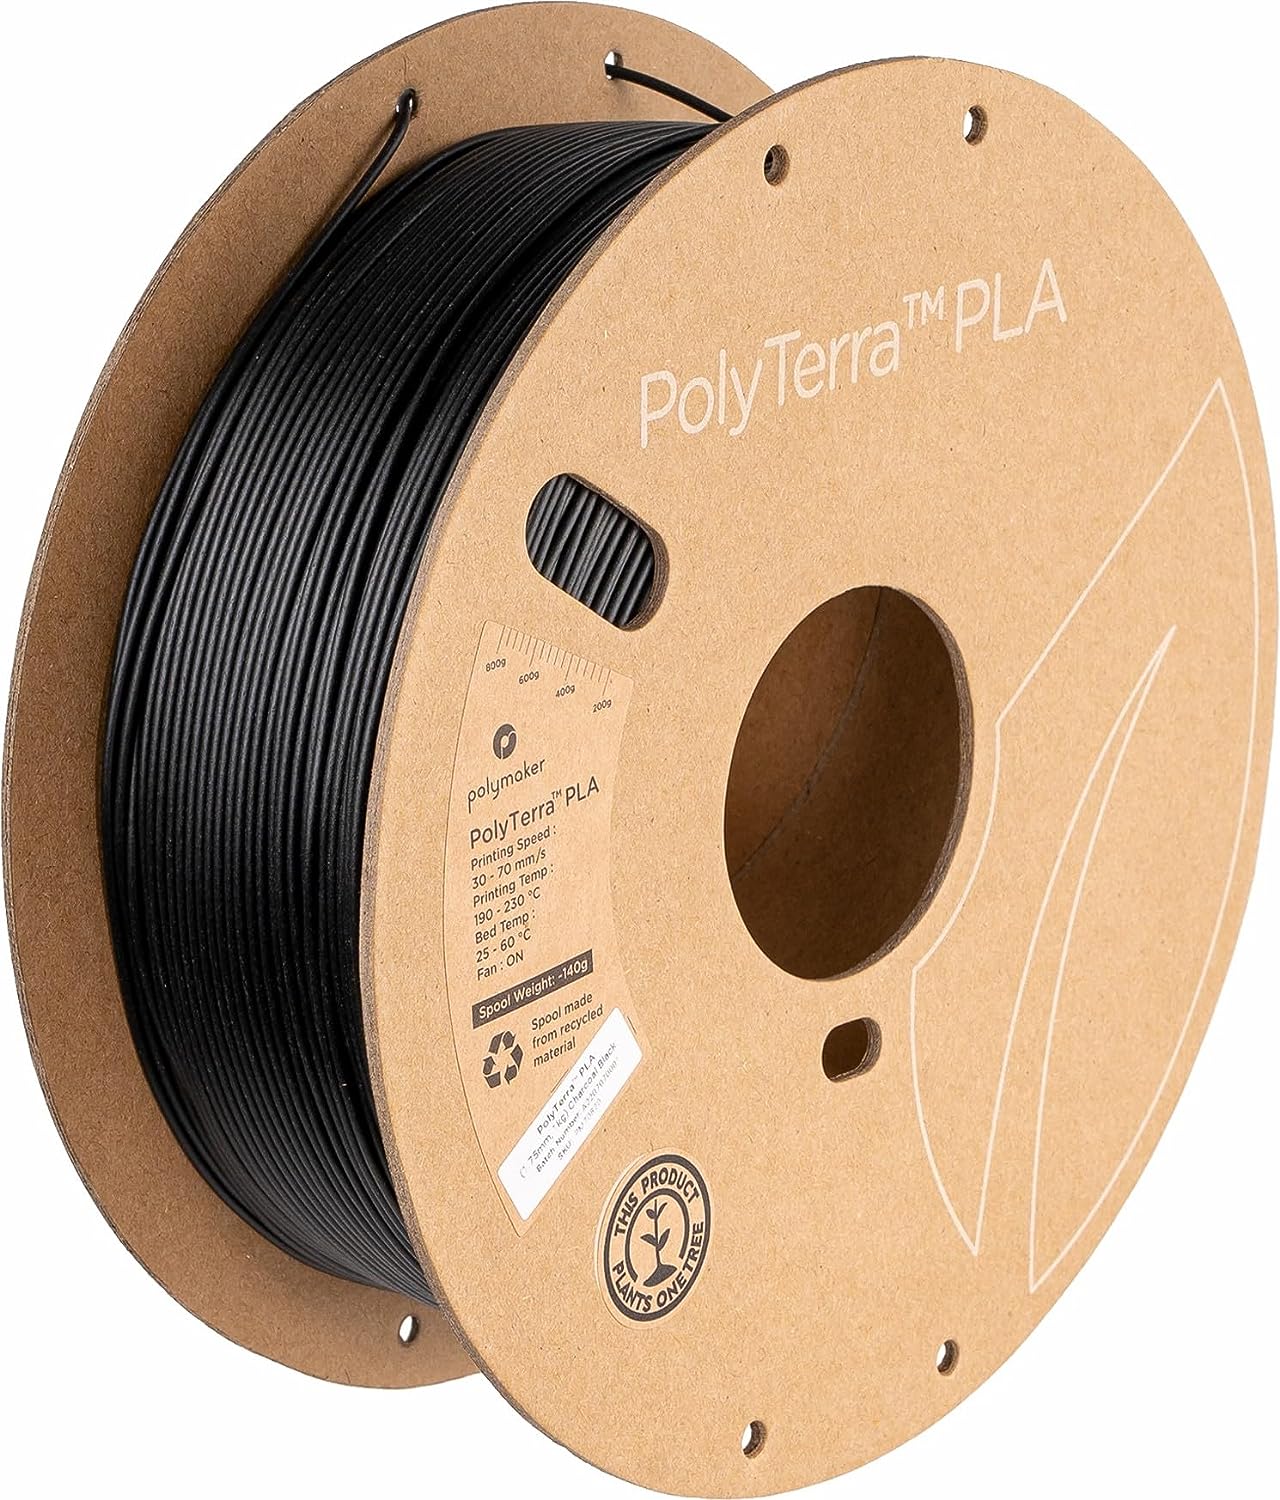 Polymaker Matte PLA Filament 1.75mm Black, 1.75 PLA 3D Printer Filament 1kg - PolyTerra 1.75 PLA Filament Matte Black 3D Printing Filament (1 Tree Planted)